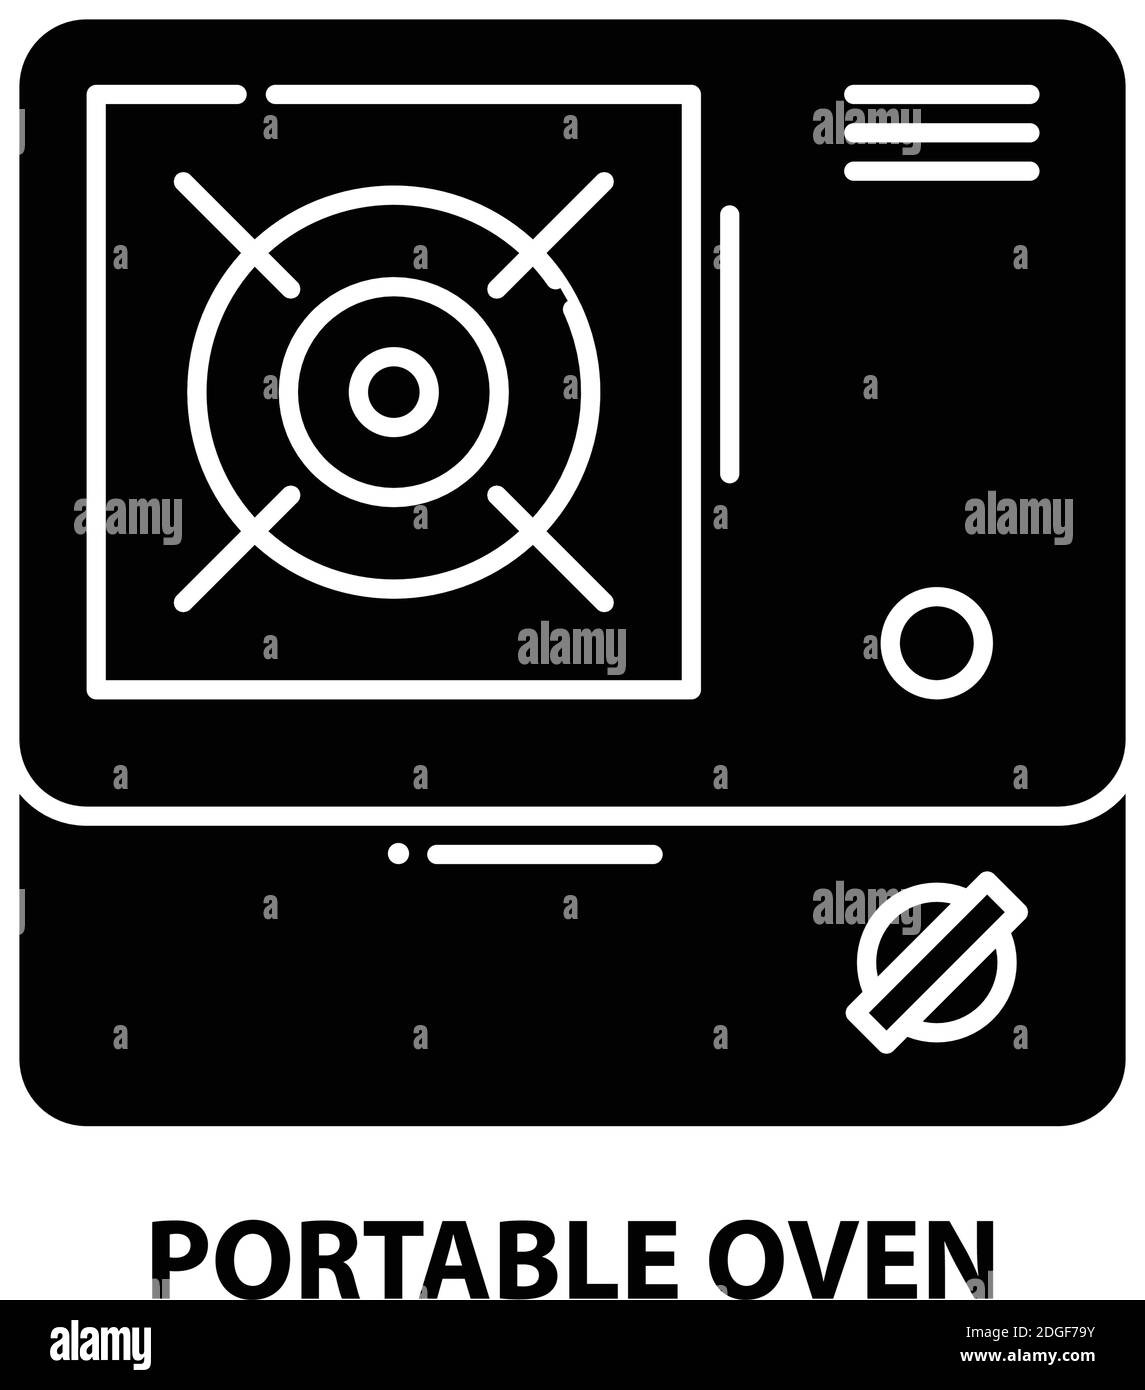 portable oven icon, black vector sign with editable strokes, concept illustration Stock Vector